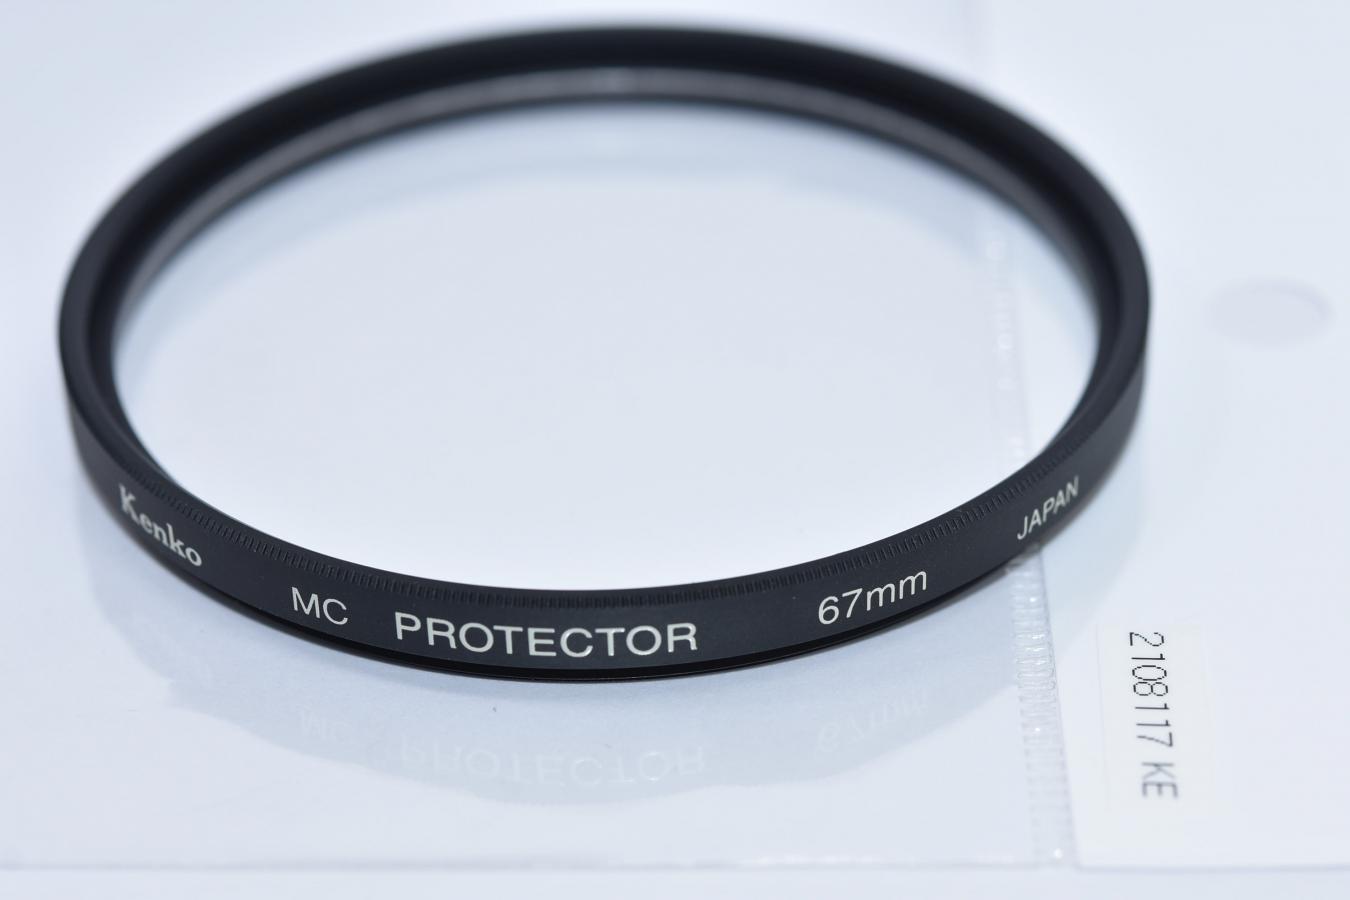 Kenko MC PROTECTOR Filter 67mm 【メーカー希望小売価格4,180円】